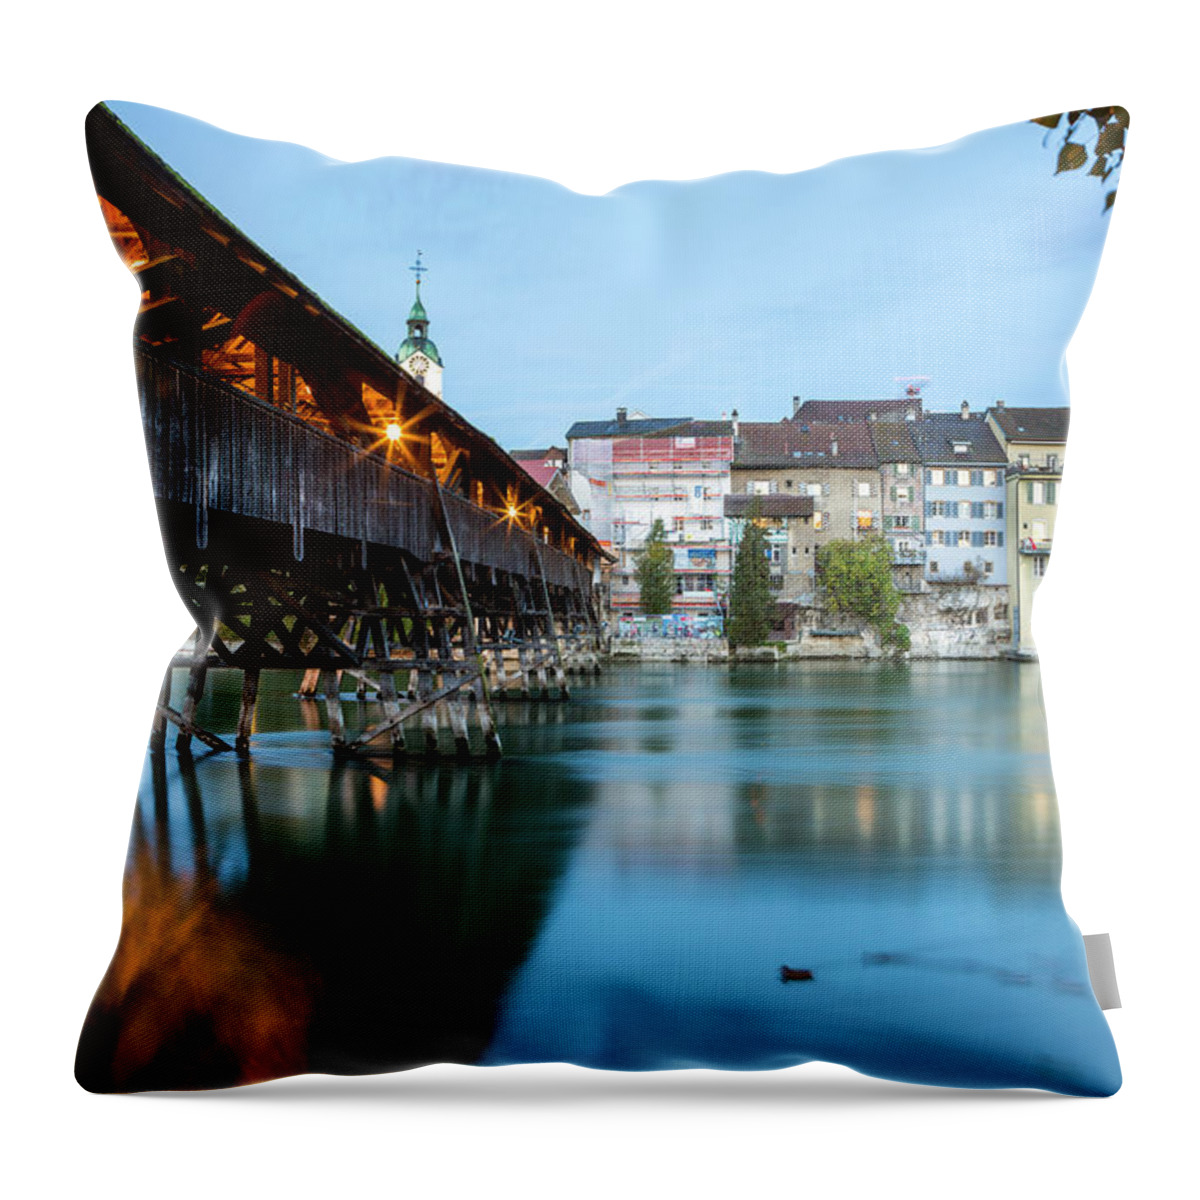 Estock Throw Pillow featuring the digital art Covered Bridge by Sebastian Wasek